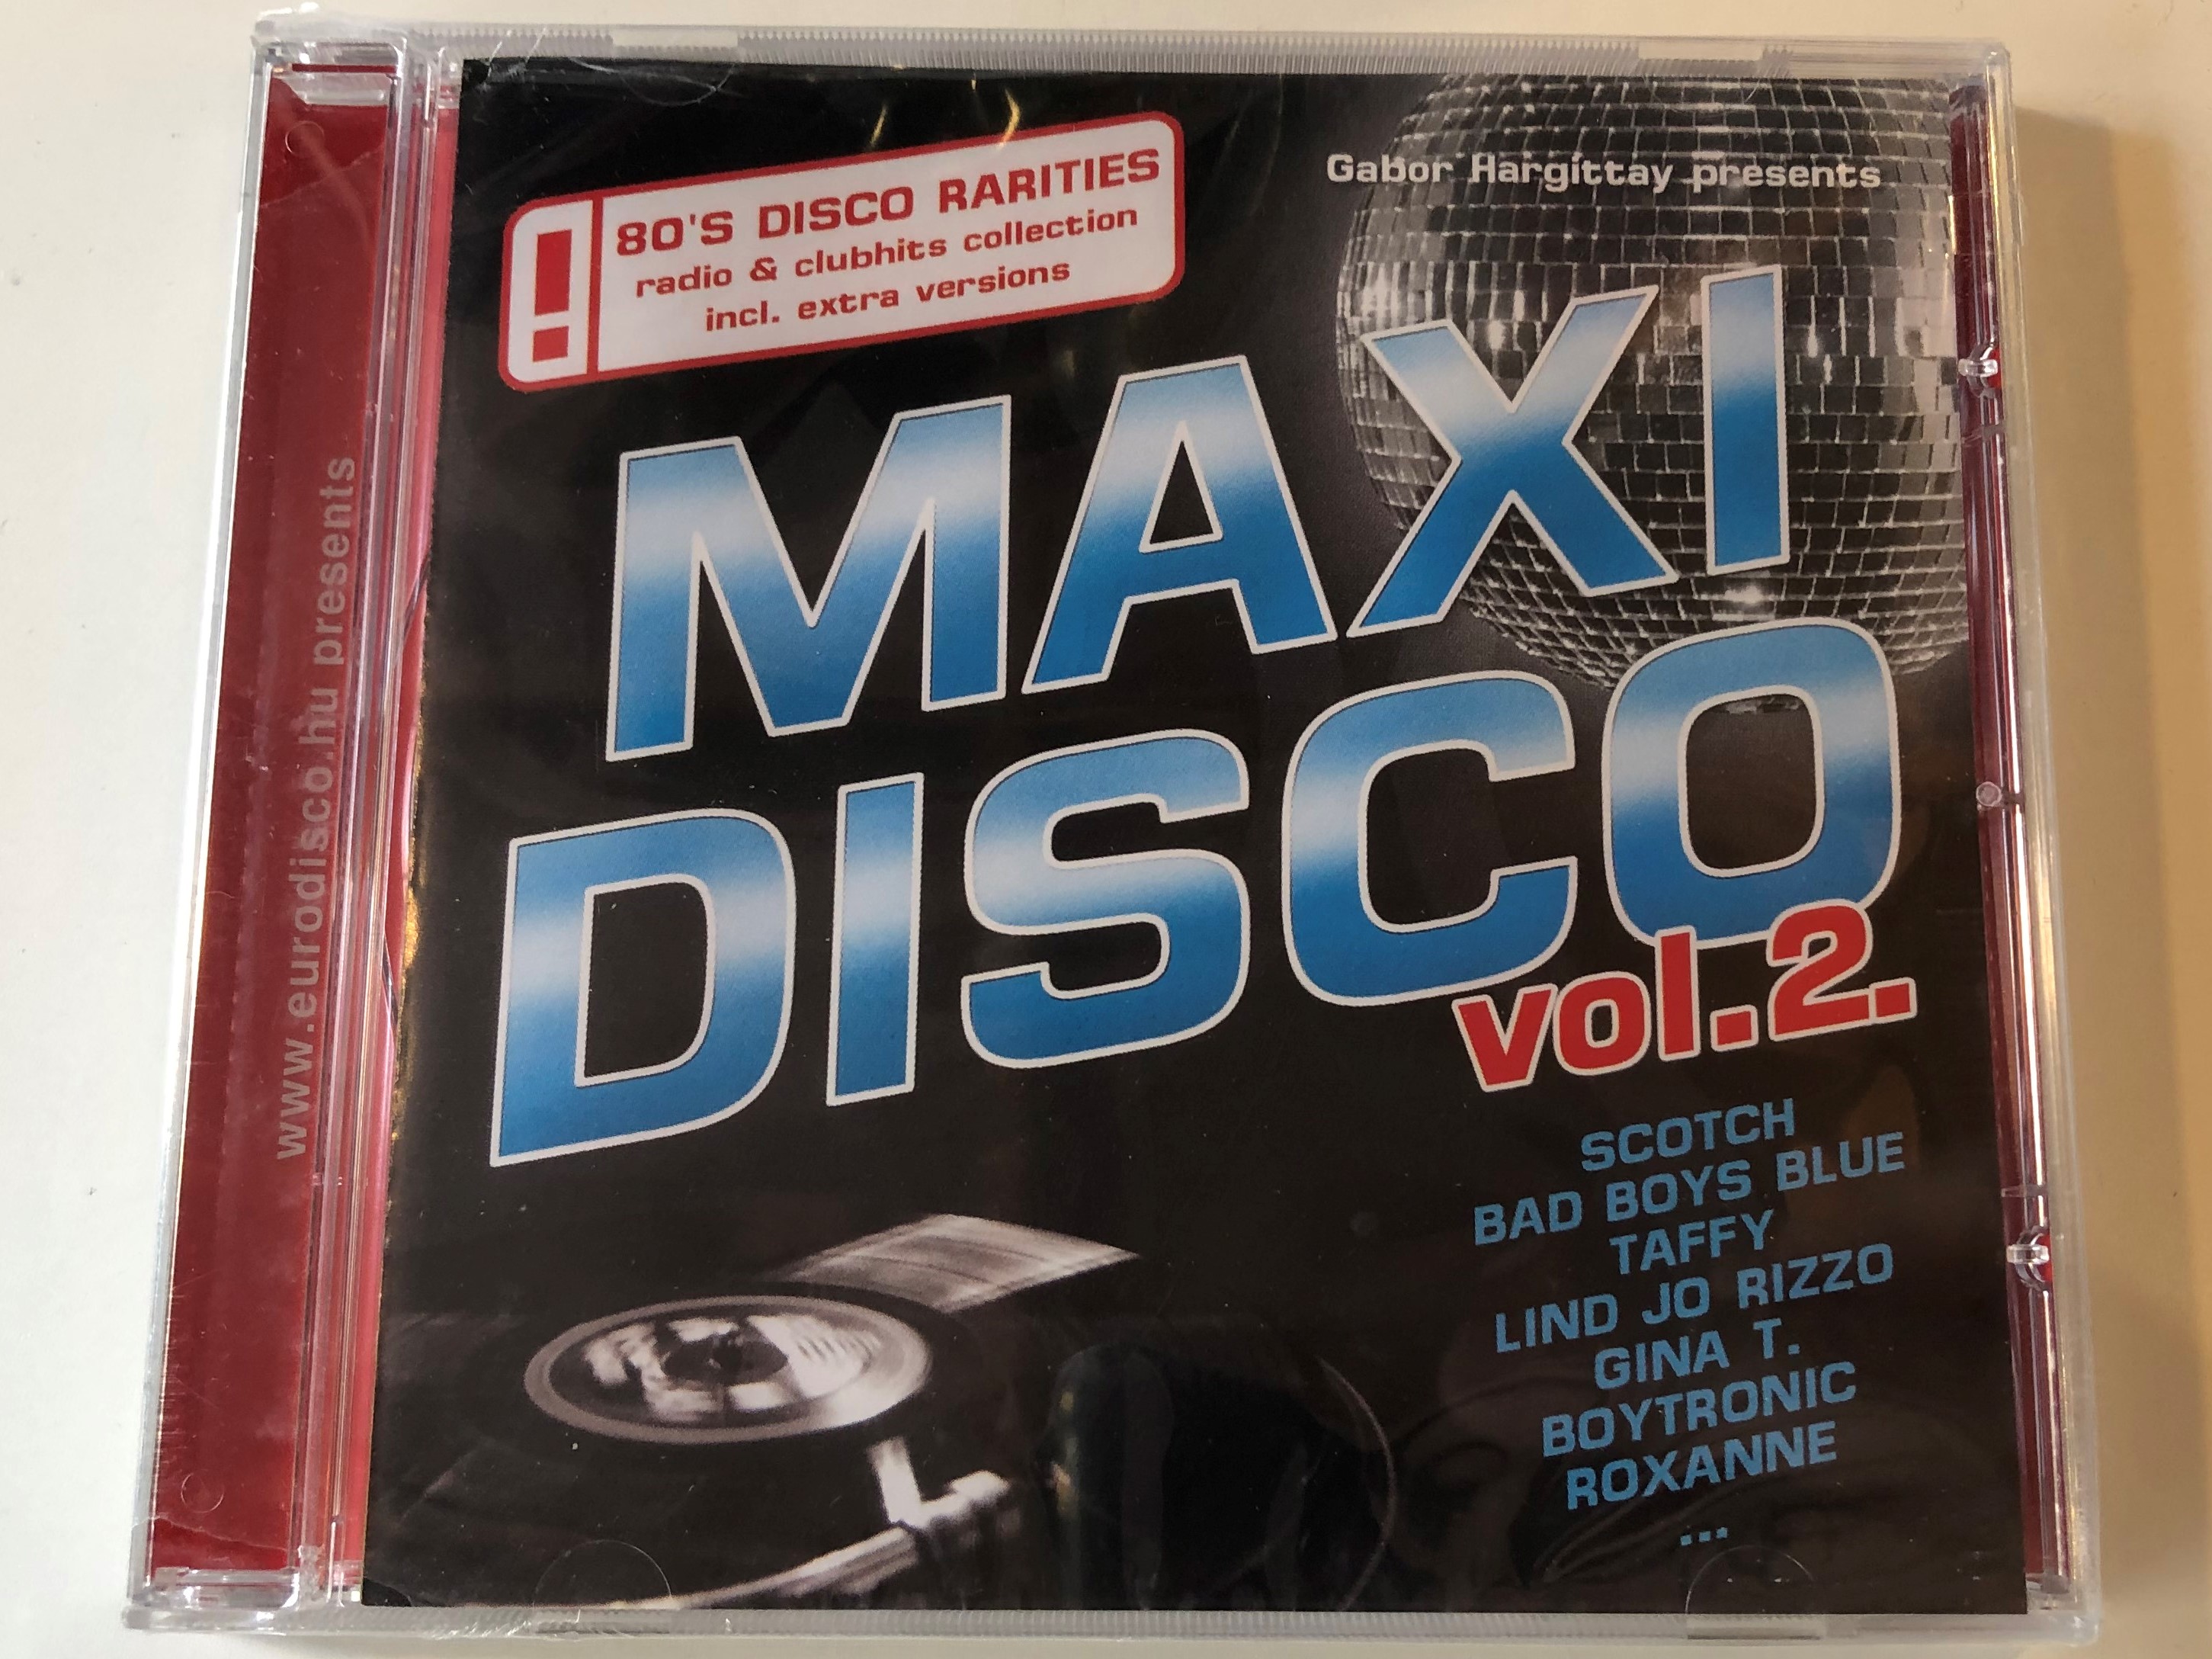 gabor-hargittay-presents-maxi-disco-vol.-2.-scotch-bad-boys-blue-taffy-linda-jo-rizzo-gina-t.-boytronic-roxanne...-80-s-disco-rarities-radio-clubhits-collection-incl.-extra-versions-ha-1-.jpg